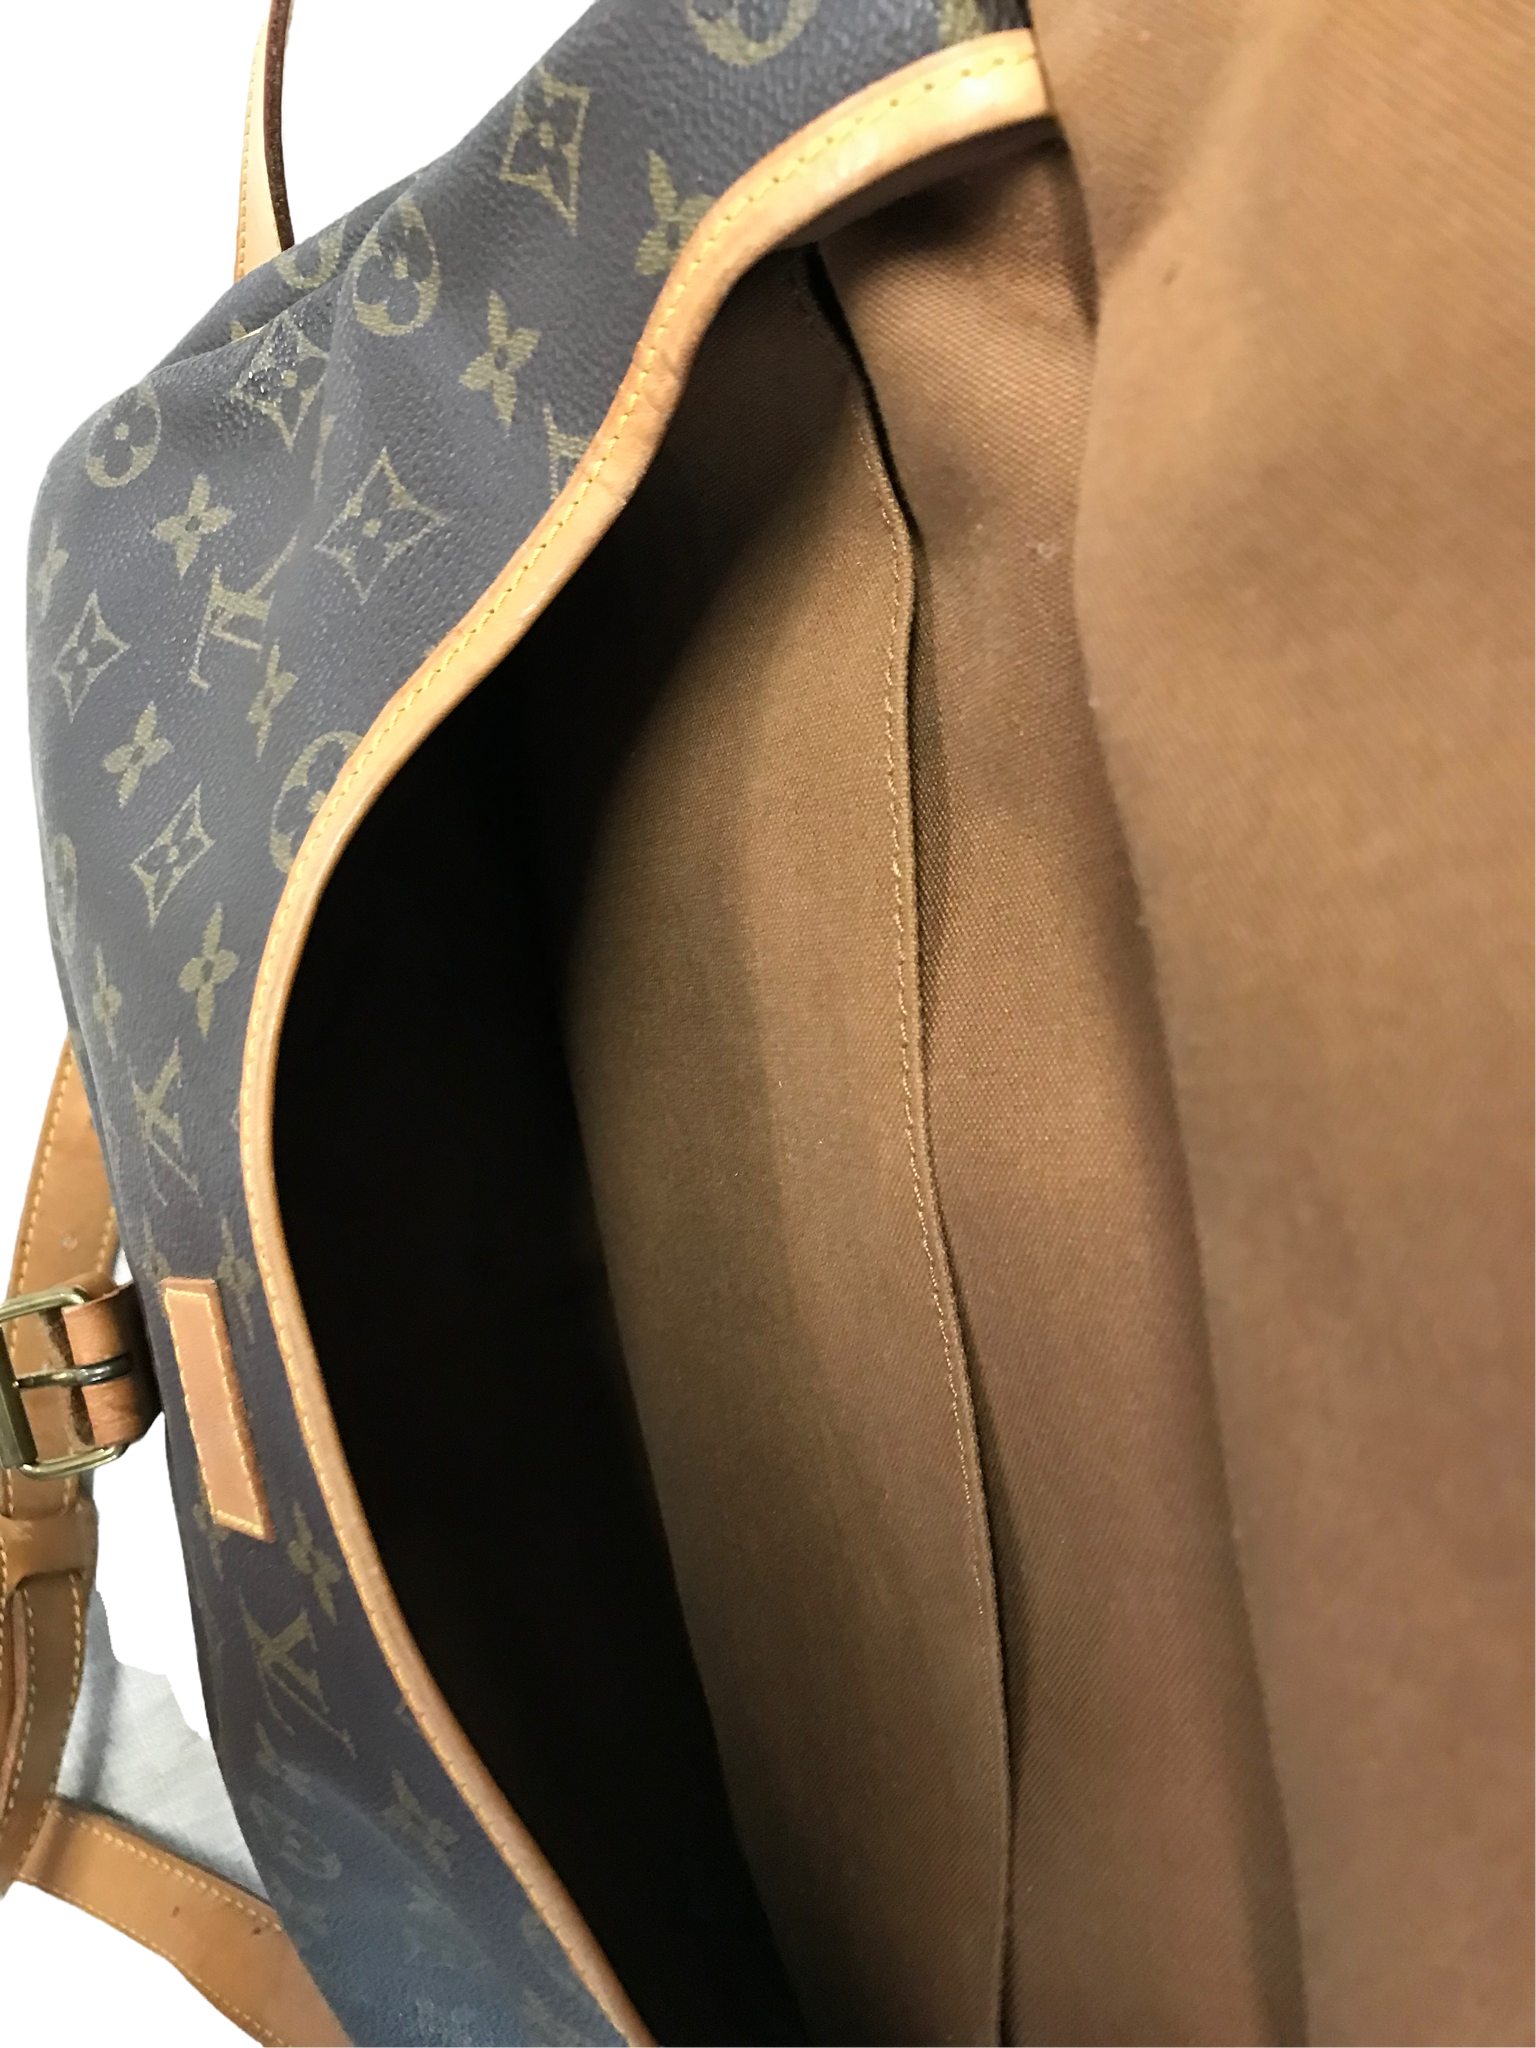 Authentic vintage louis vuitton saumur 35 saddle bag In Very Good Condition.